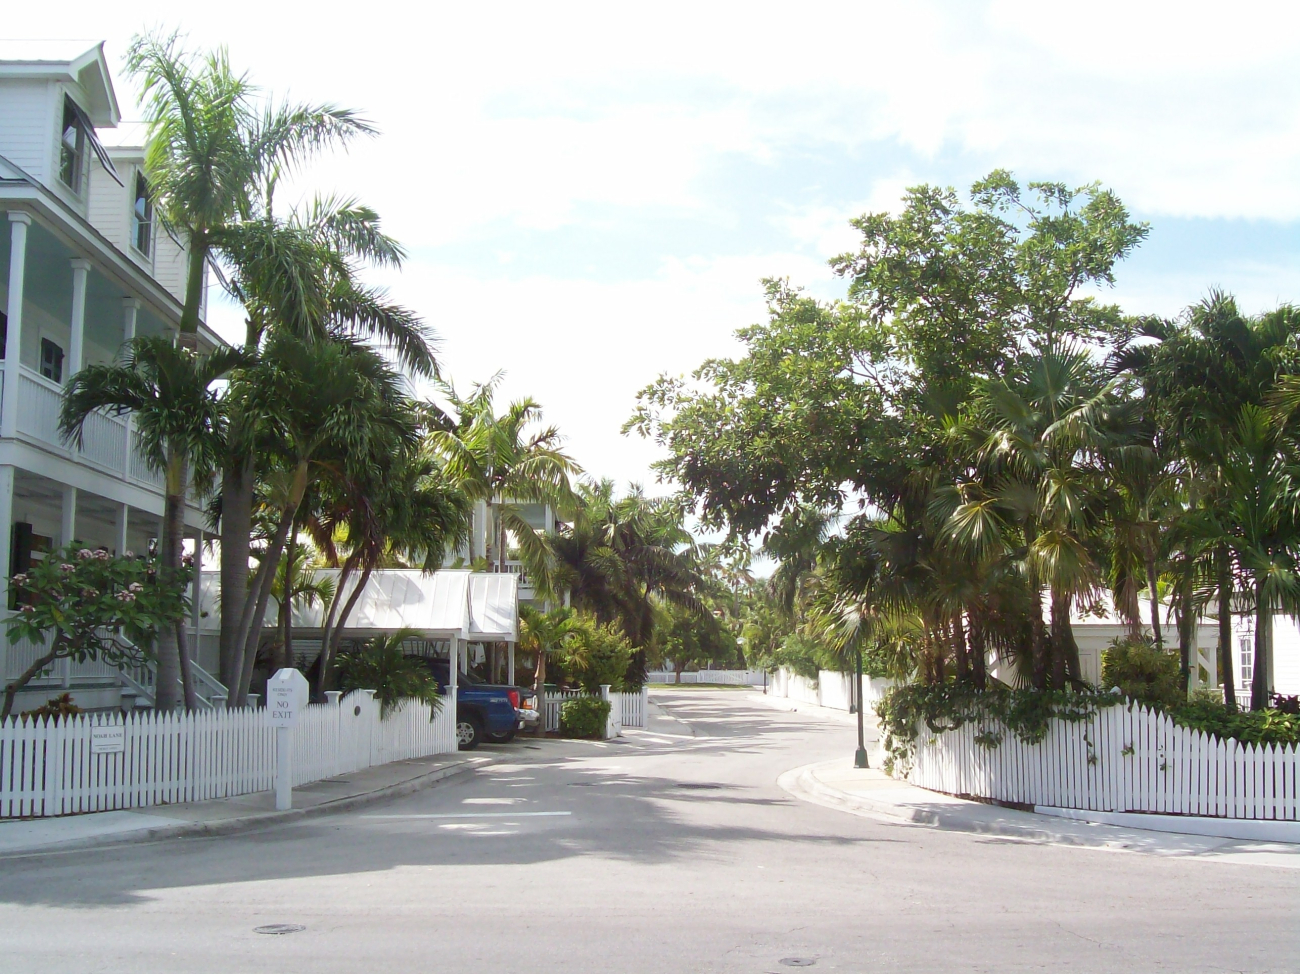 A pleasant Key West street